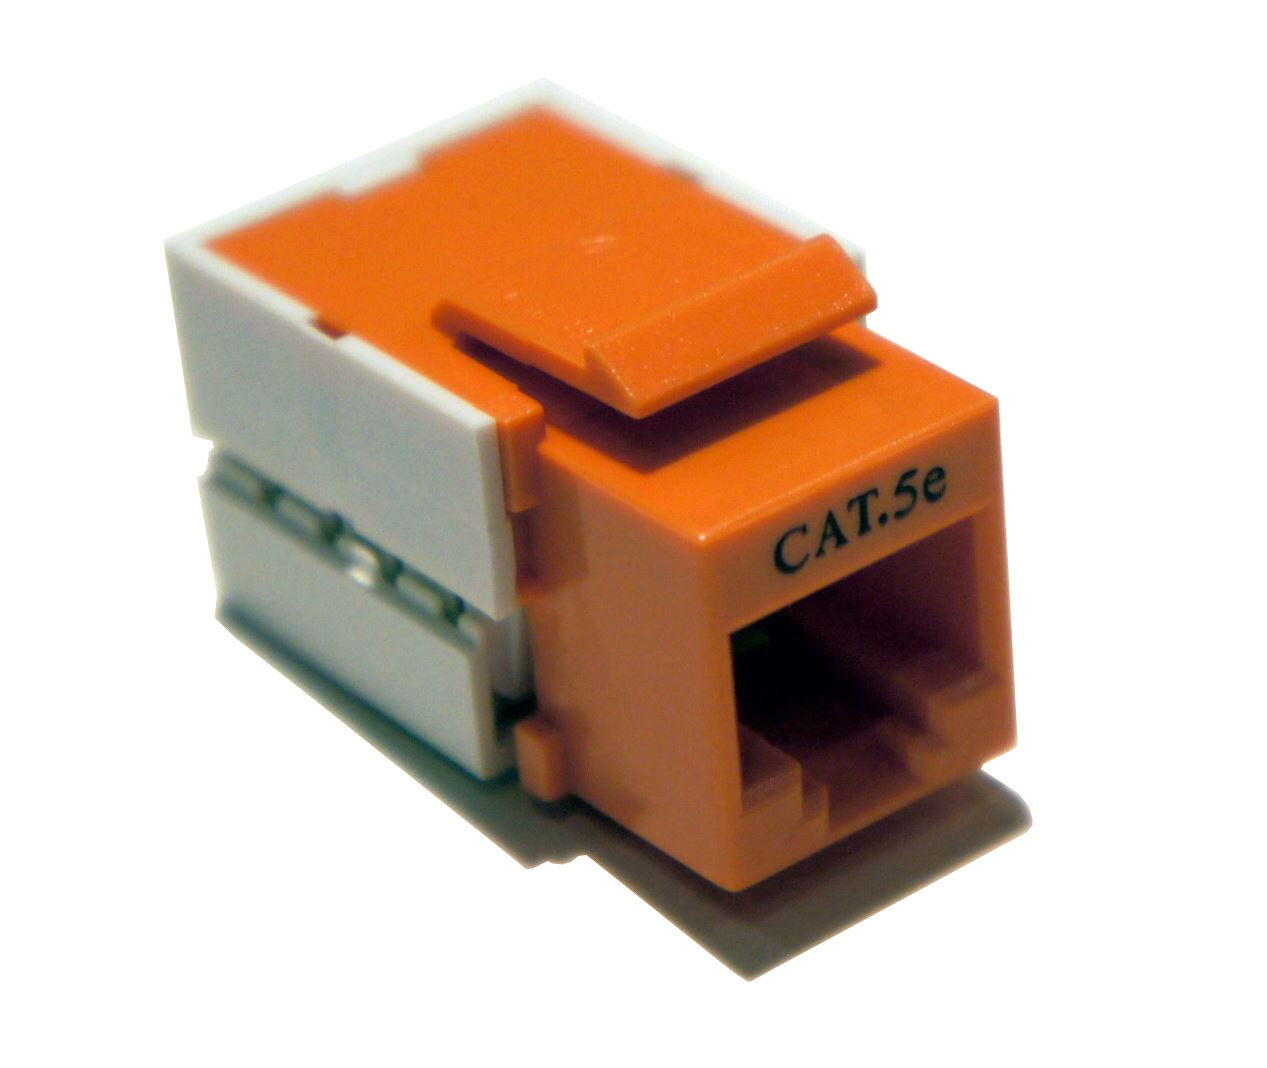 CAT.5e Cat 5 e Cat5e Orange Keystone Data Jack 568B / 568A Internet Ethernet